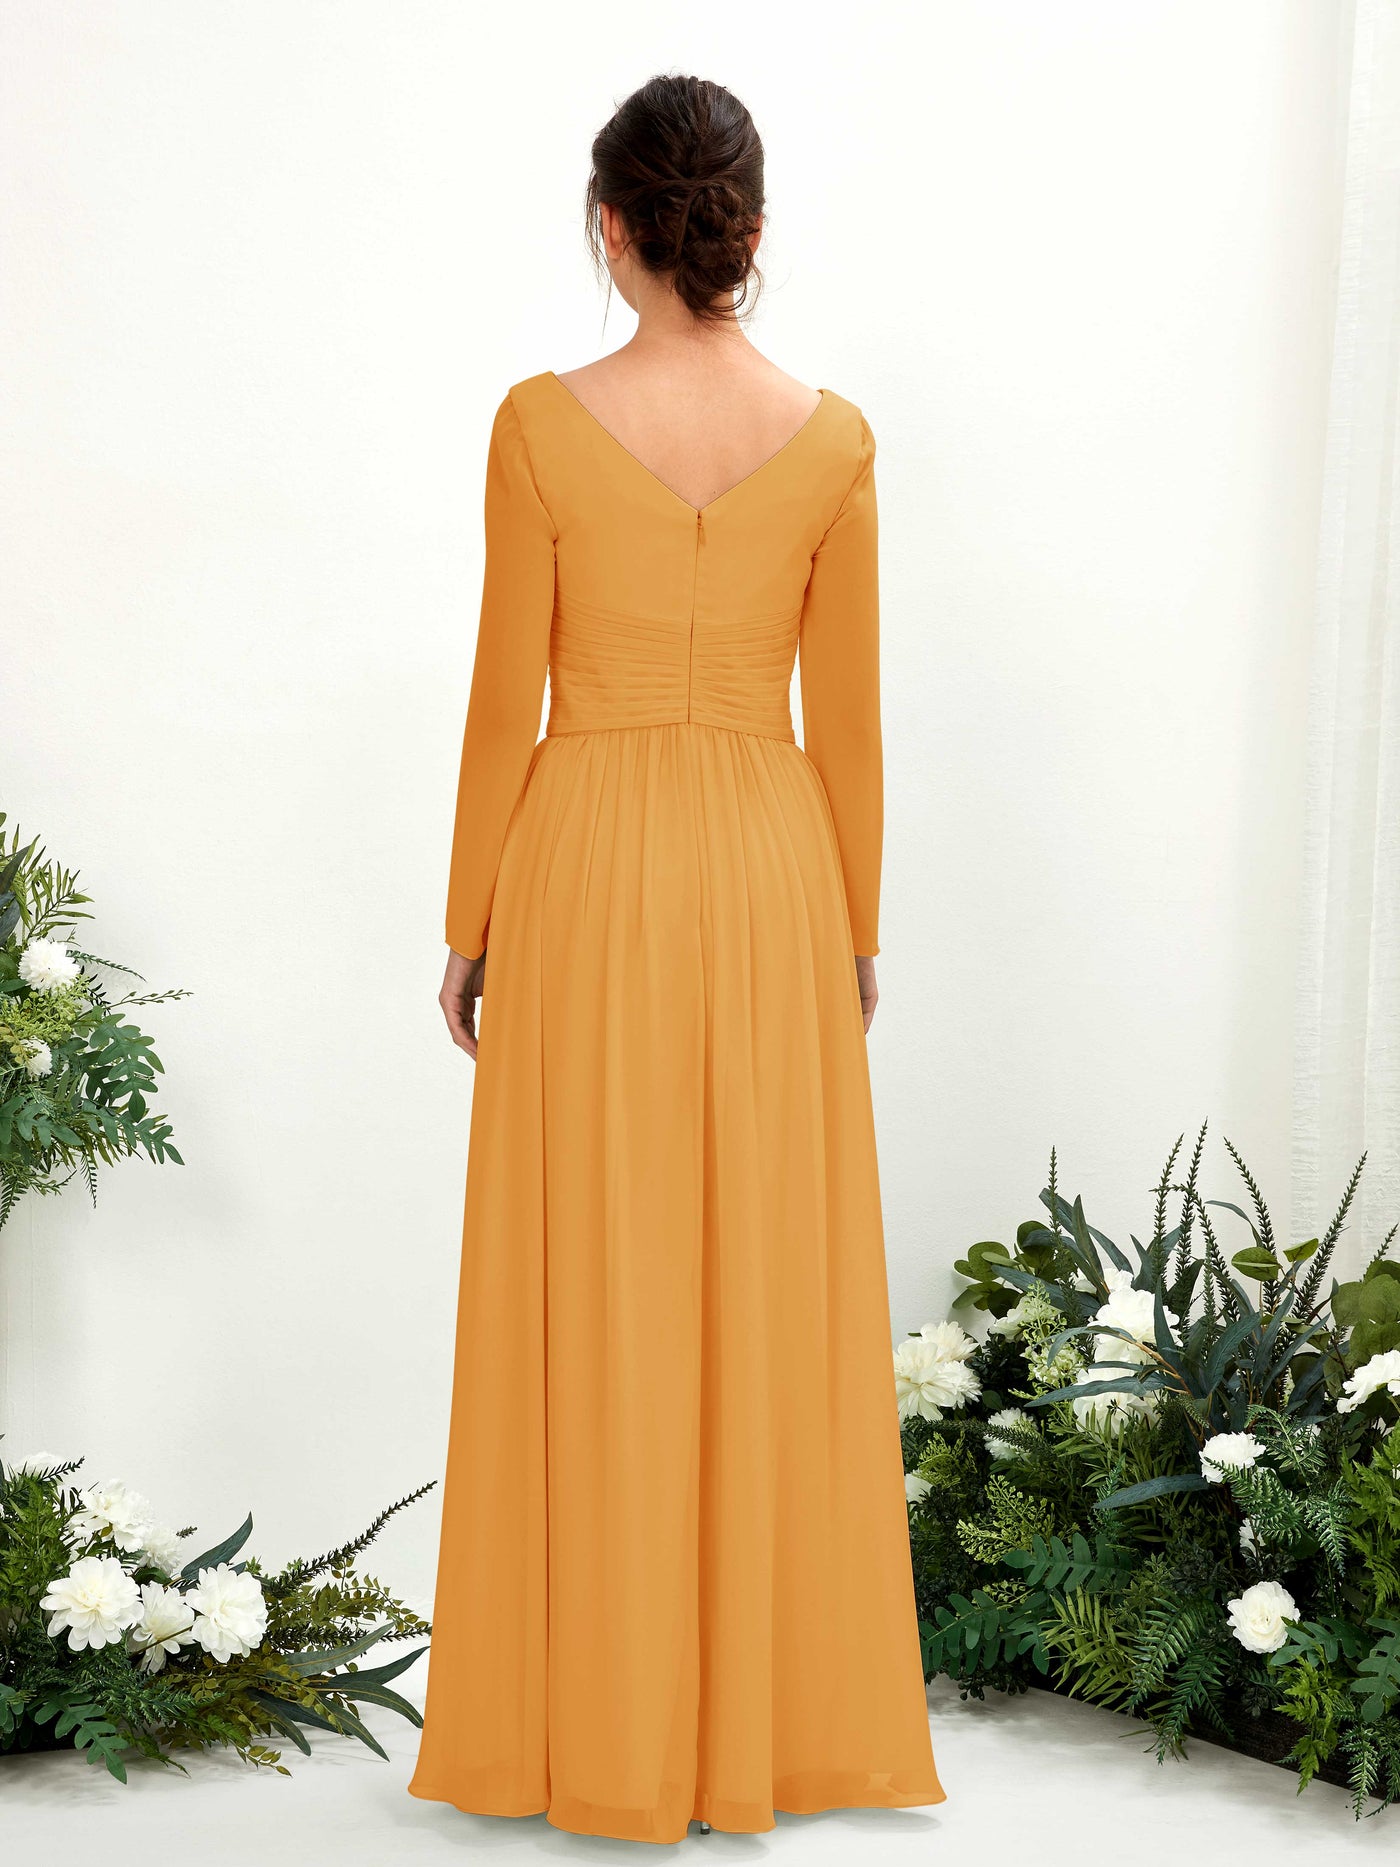 Mango Bridesmaid Dresses Bridesmaid Dress A-line Chiffon V-neck Full Length Long Sleeves Wedding Party Dress (81220302)#color_mango